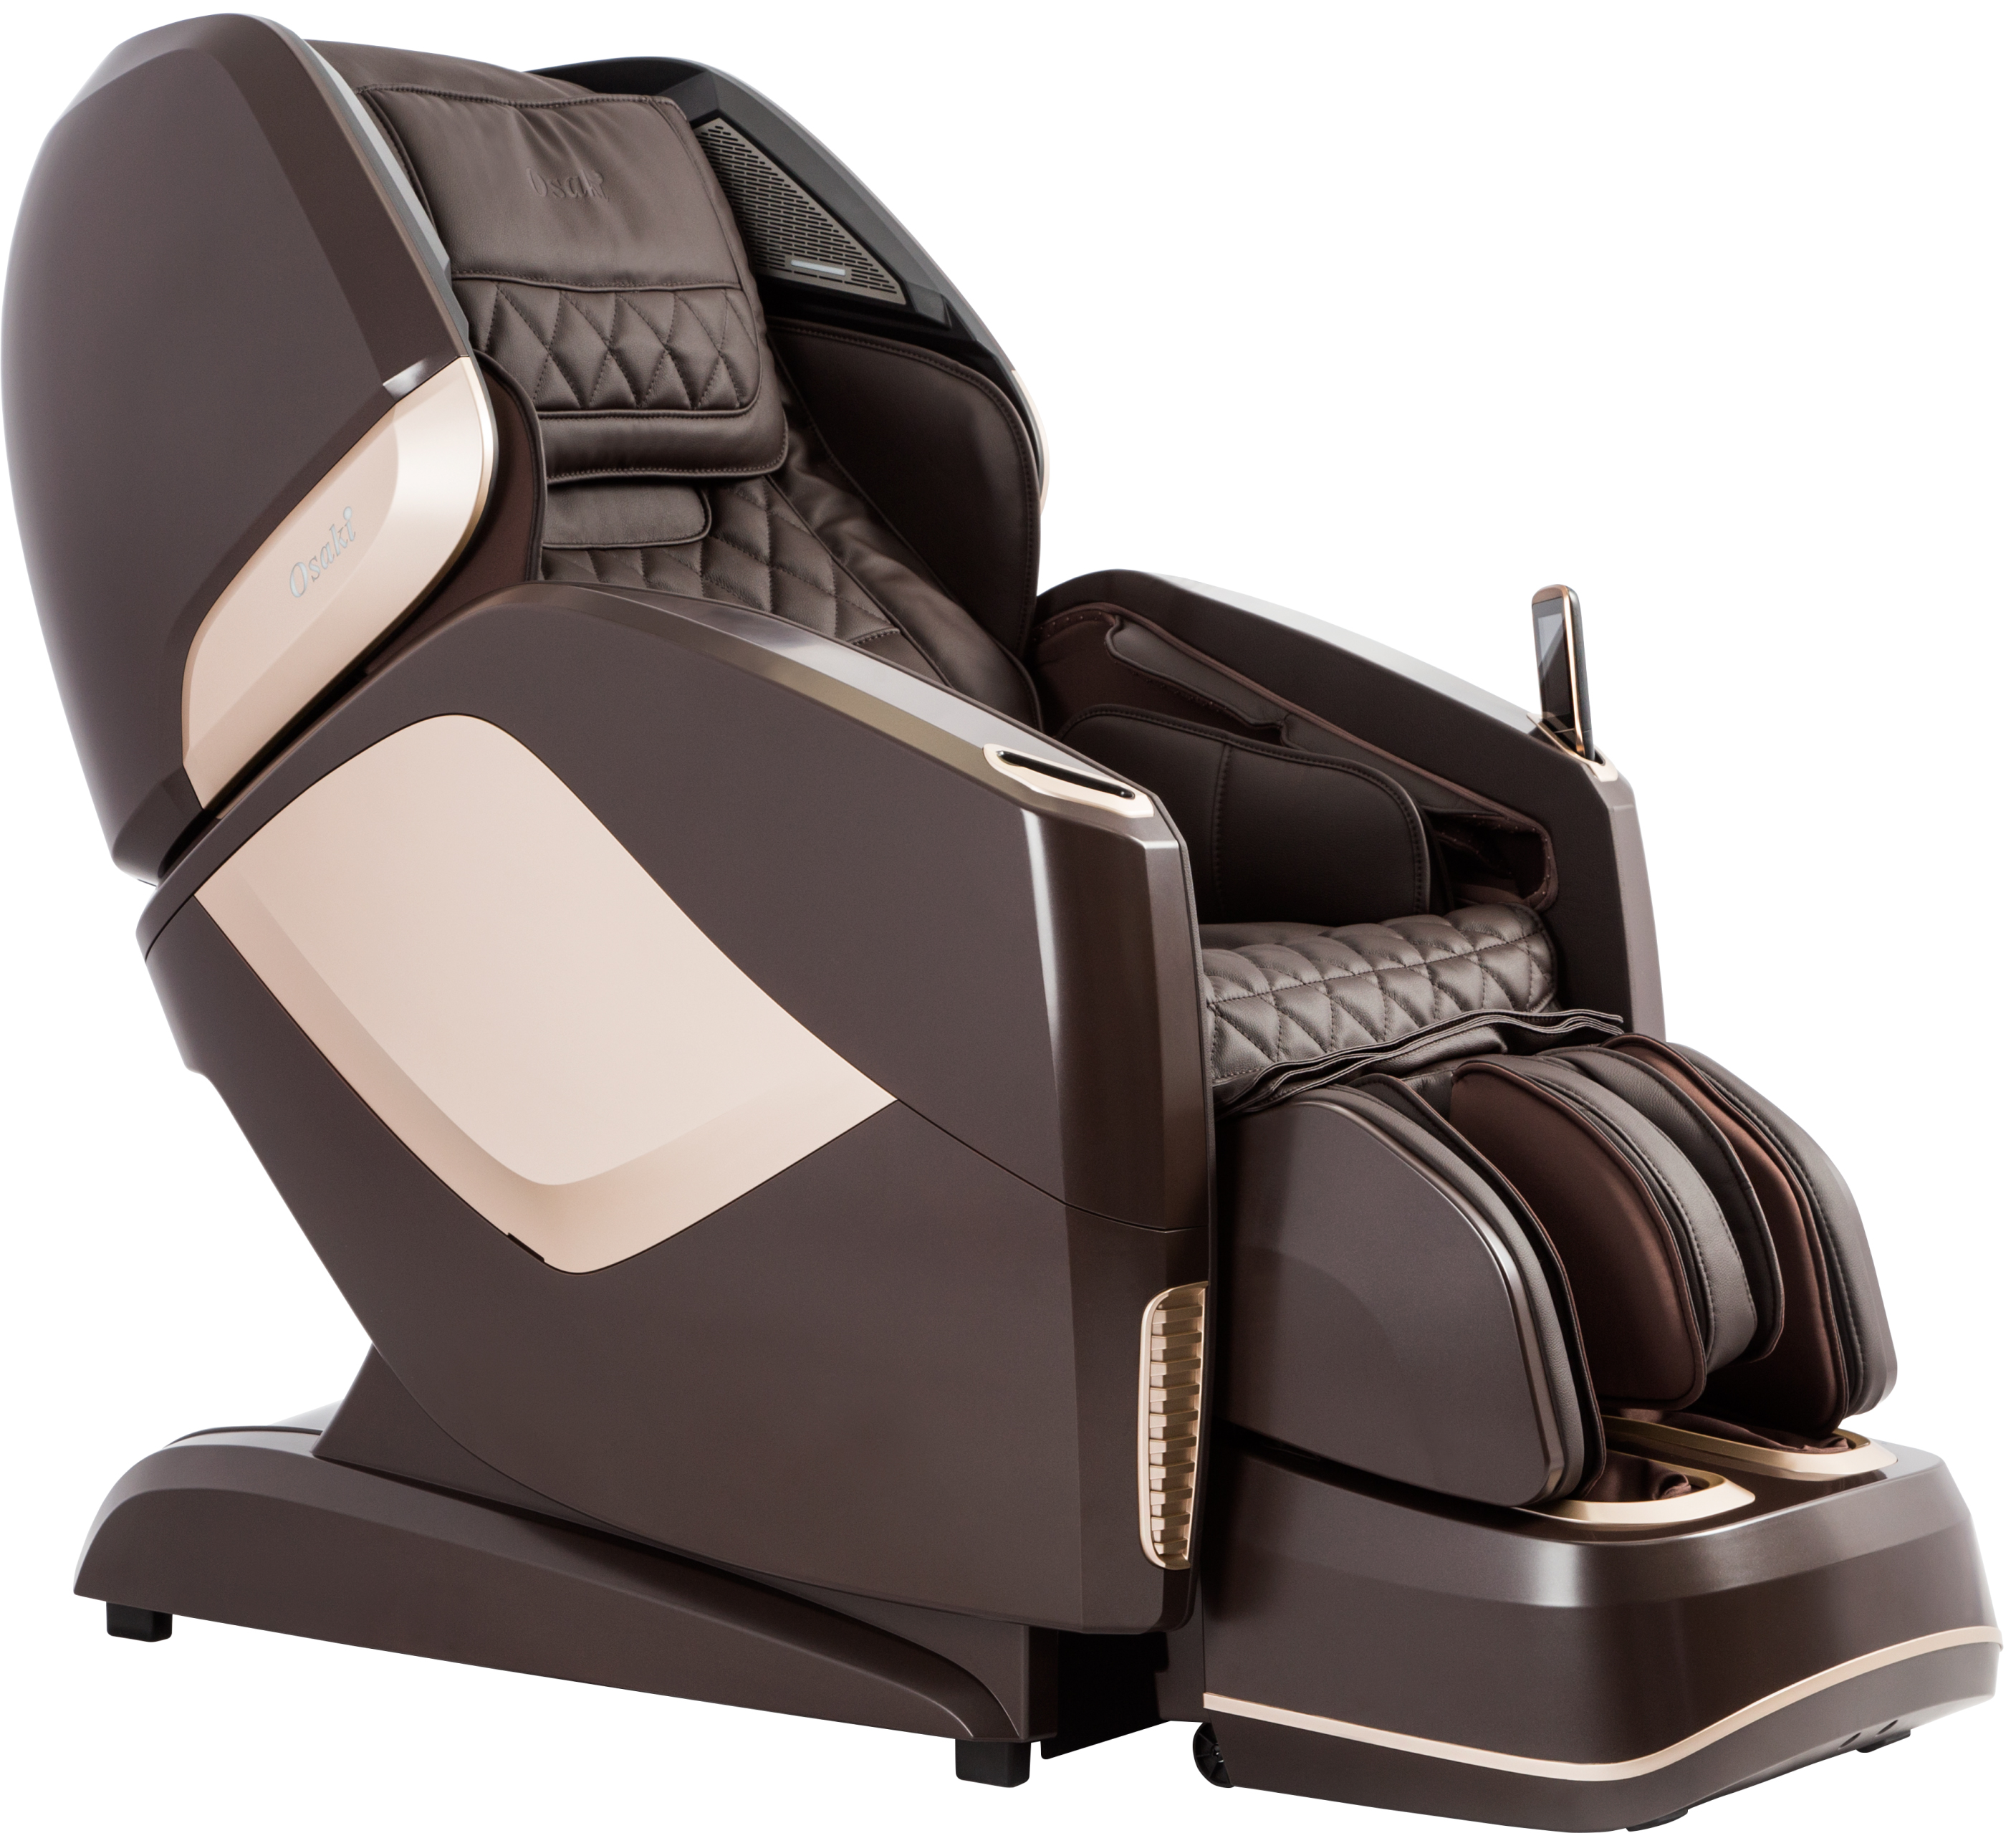 https://vitalityweb.com/backstore/Osaki/pics/Maestro/Osaki-OS-PRO-Maestro-Massage-Chair-Recliner-Brown.jpg